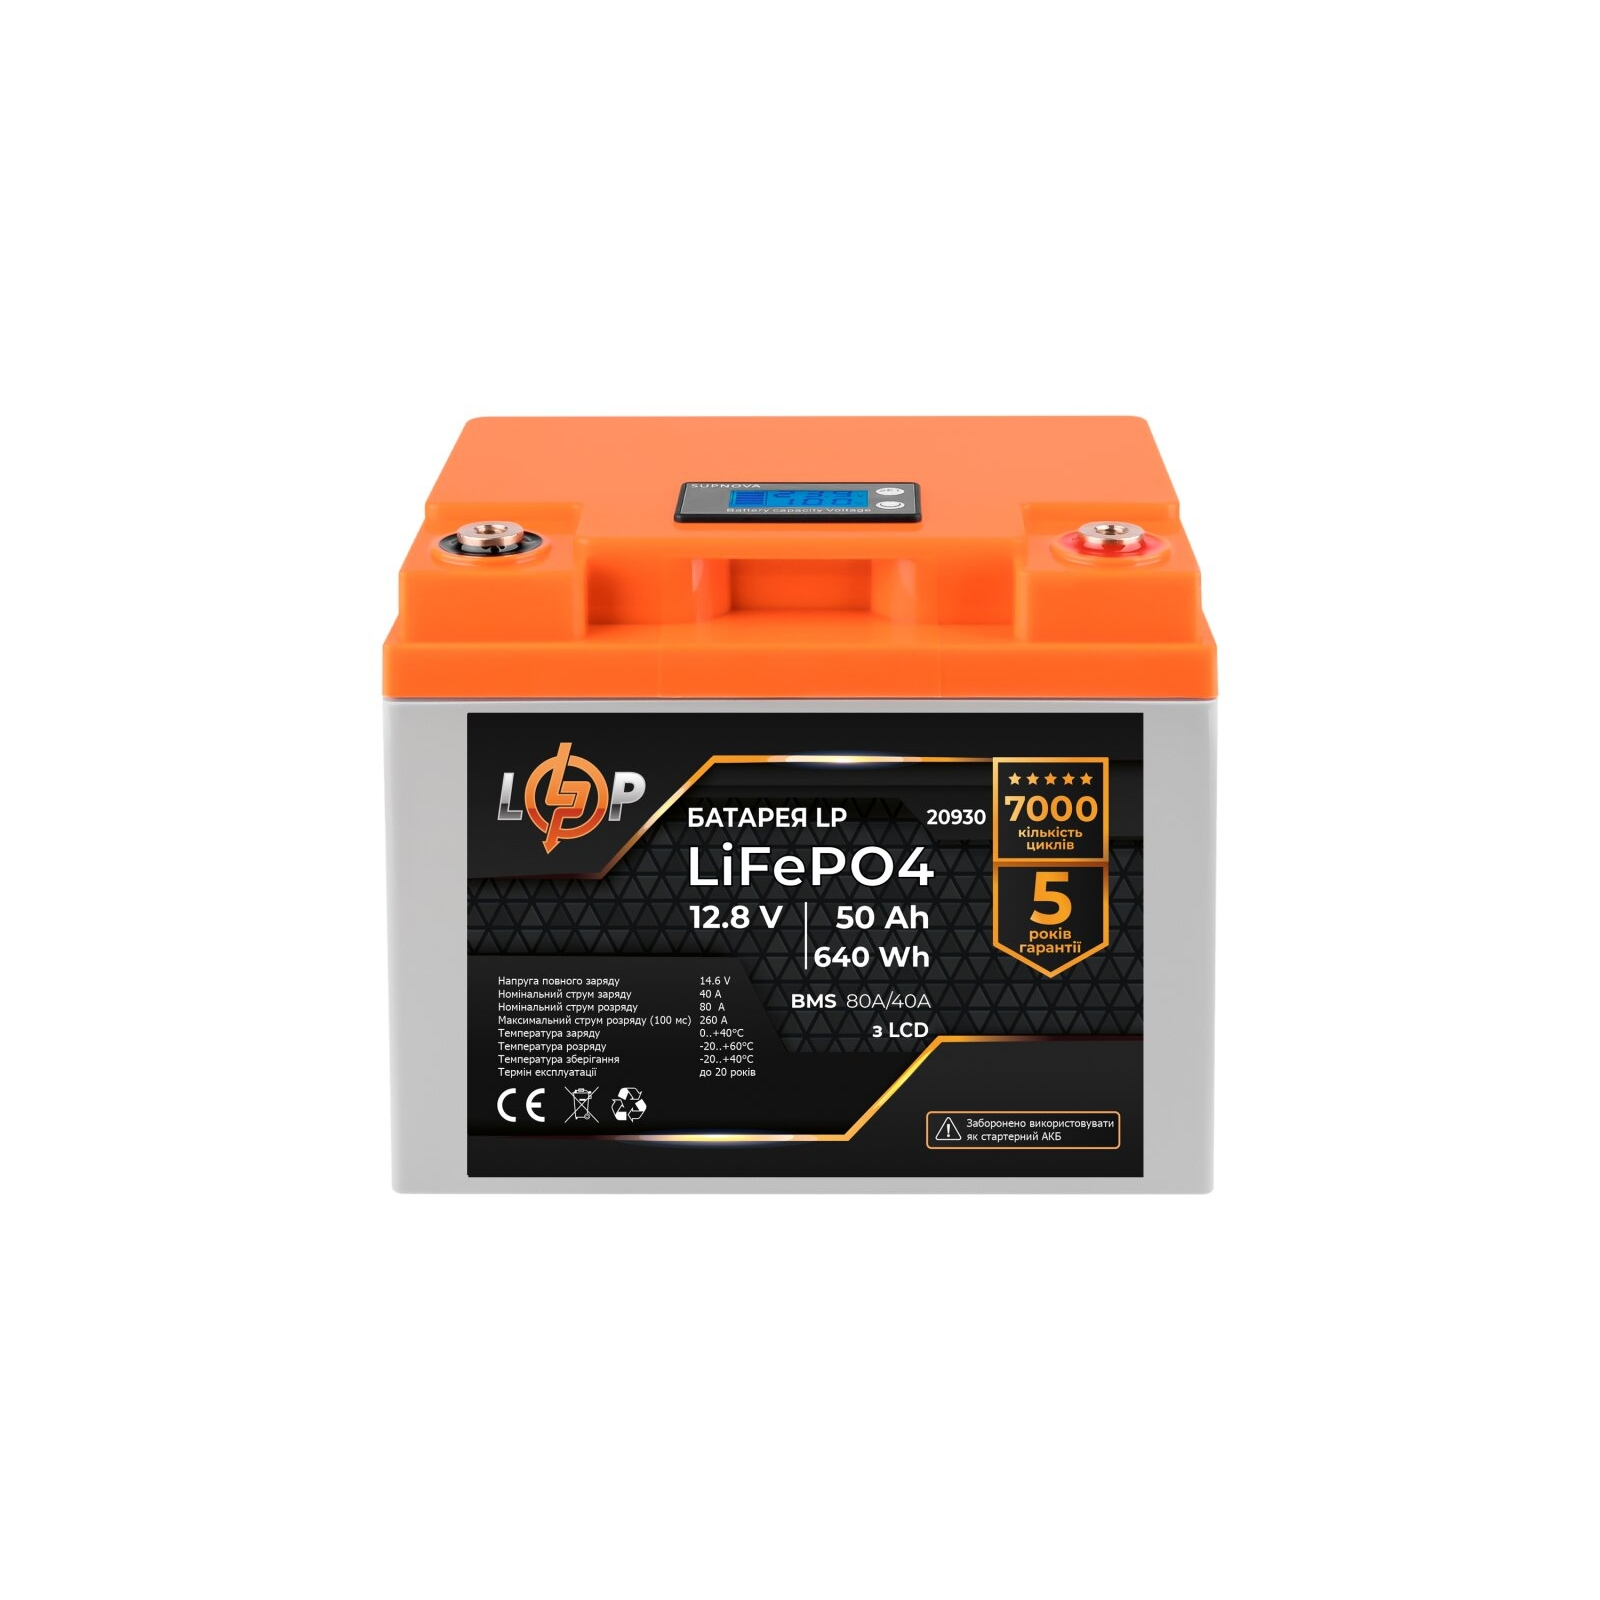 Батарея LiFePo4 LogicPower 12V (12.8V) - 50 Ah (640Wh) (20930)